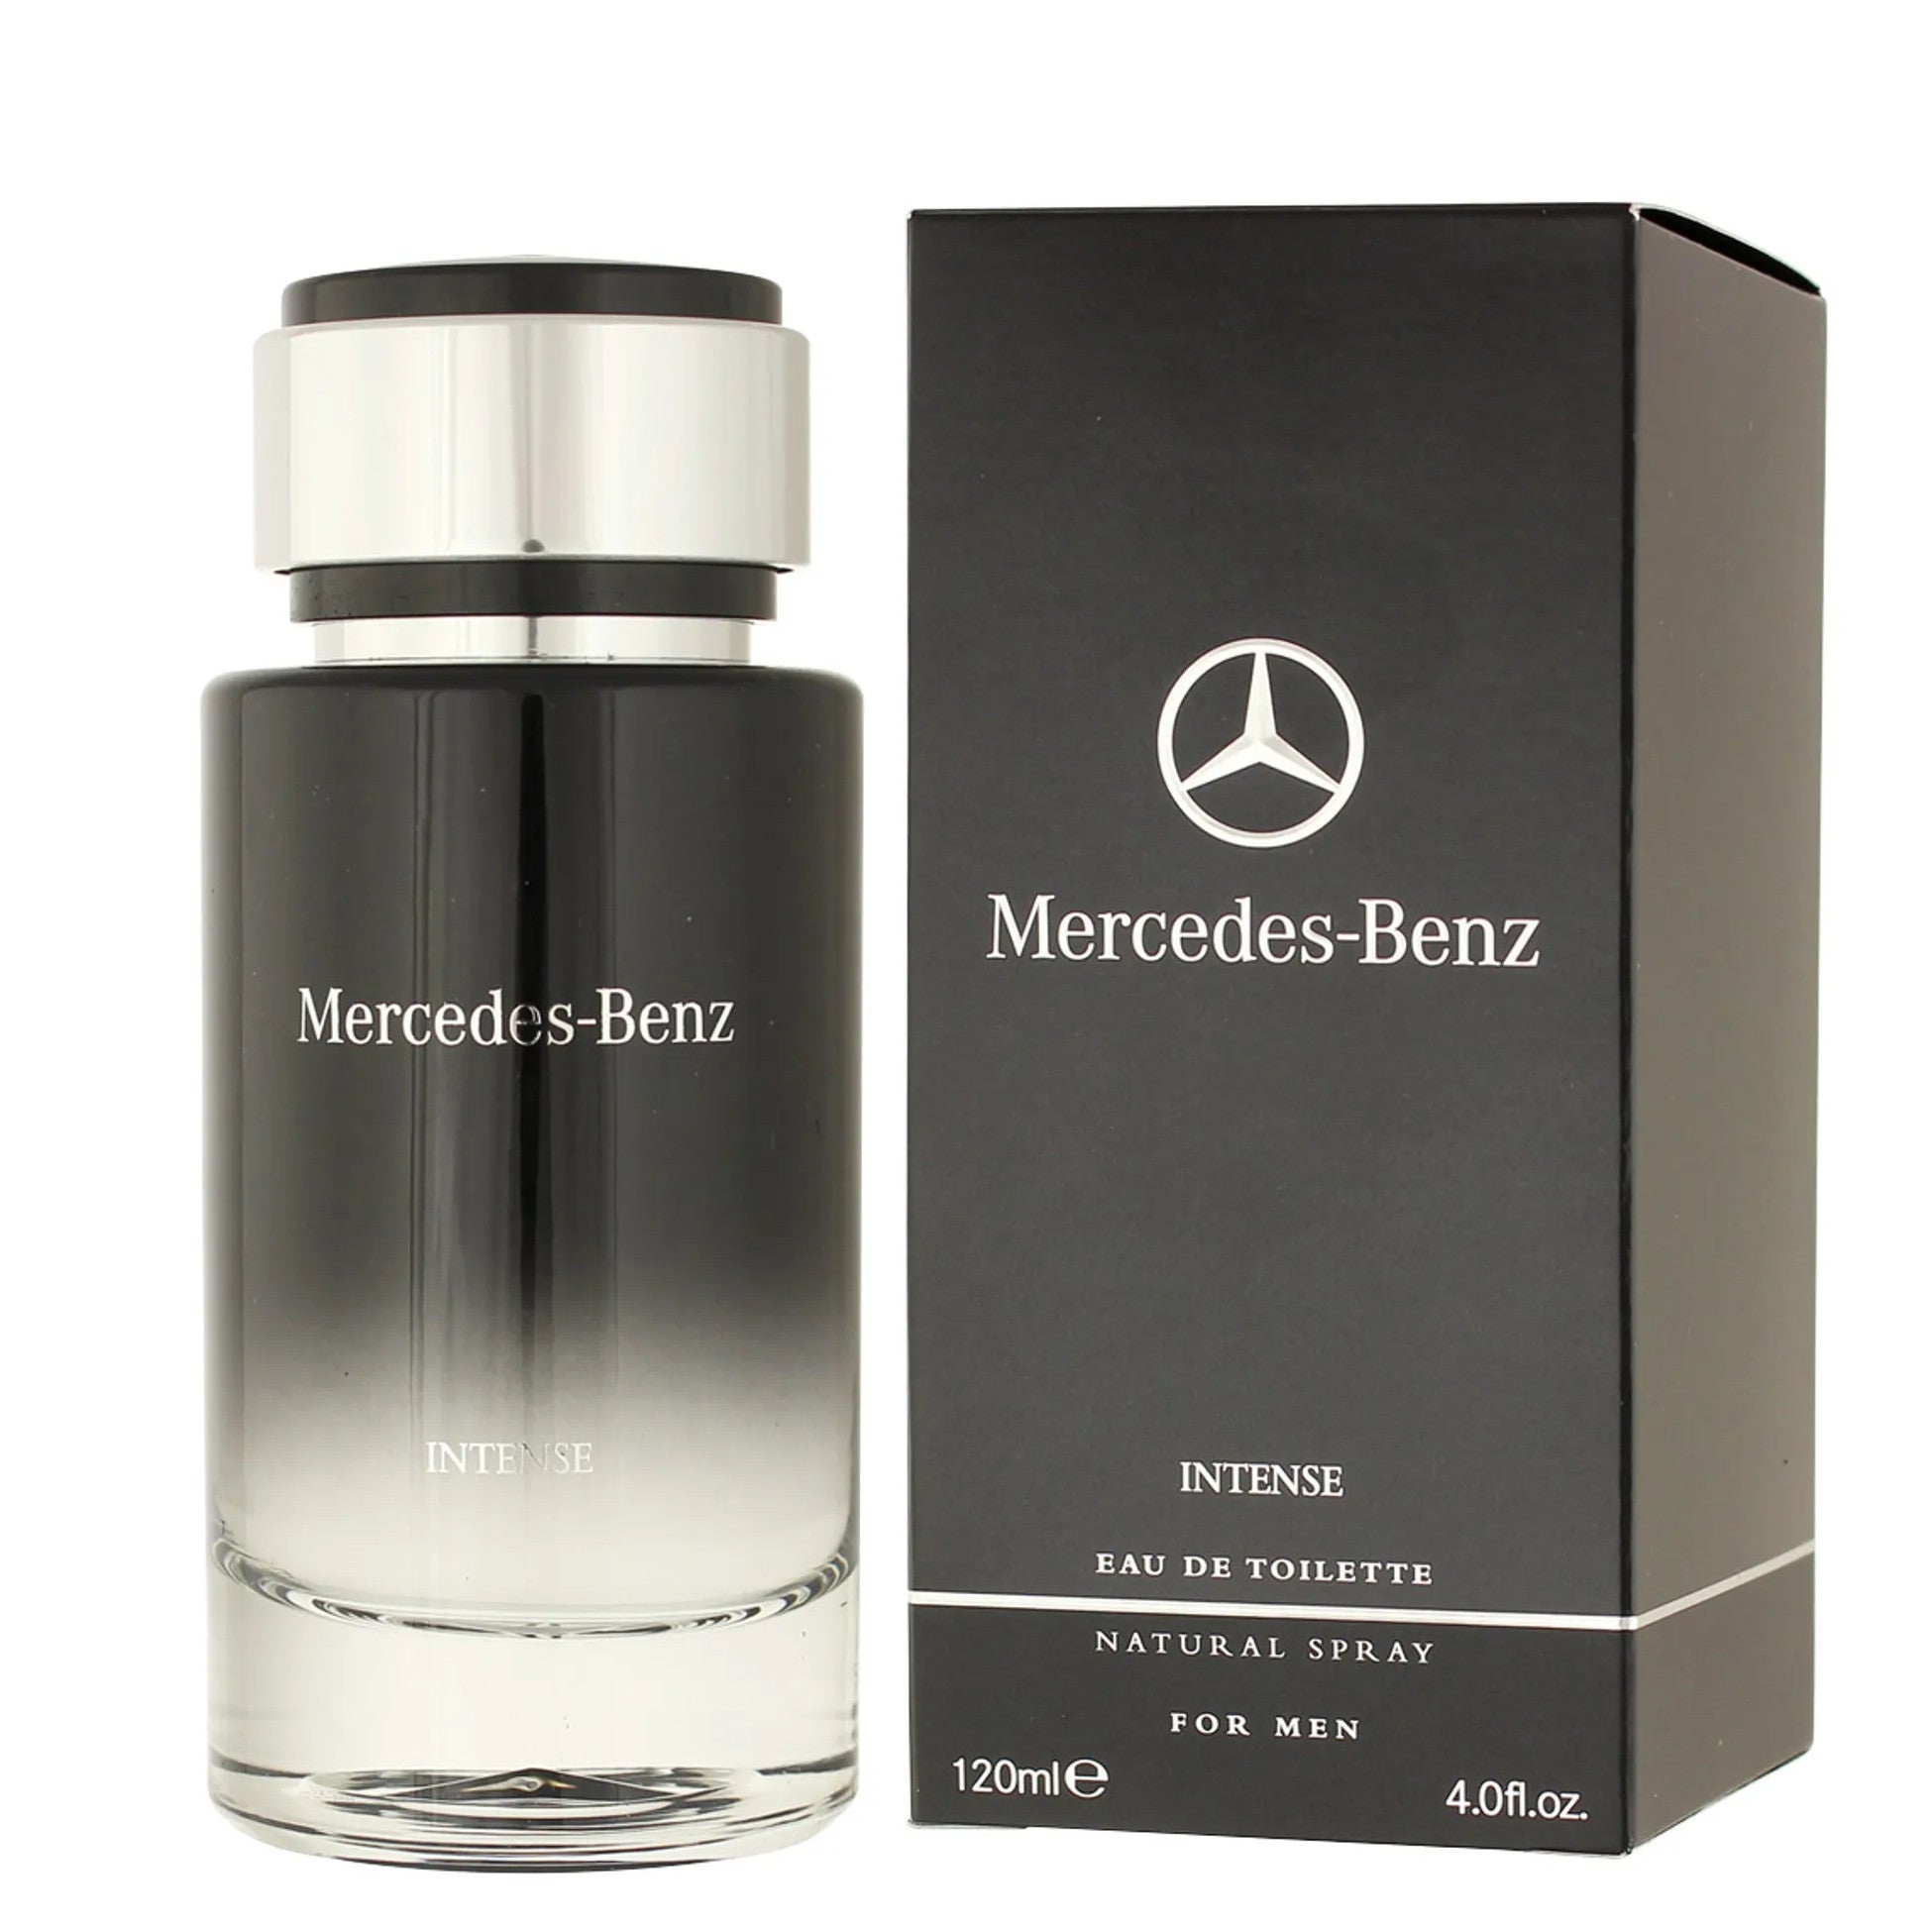 Mercedes-Benz INTENSE 4.0 OZ EAU DE TOILETTE SPRAY NEW in Box